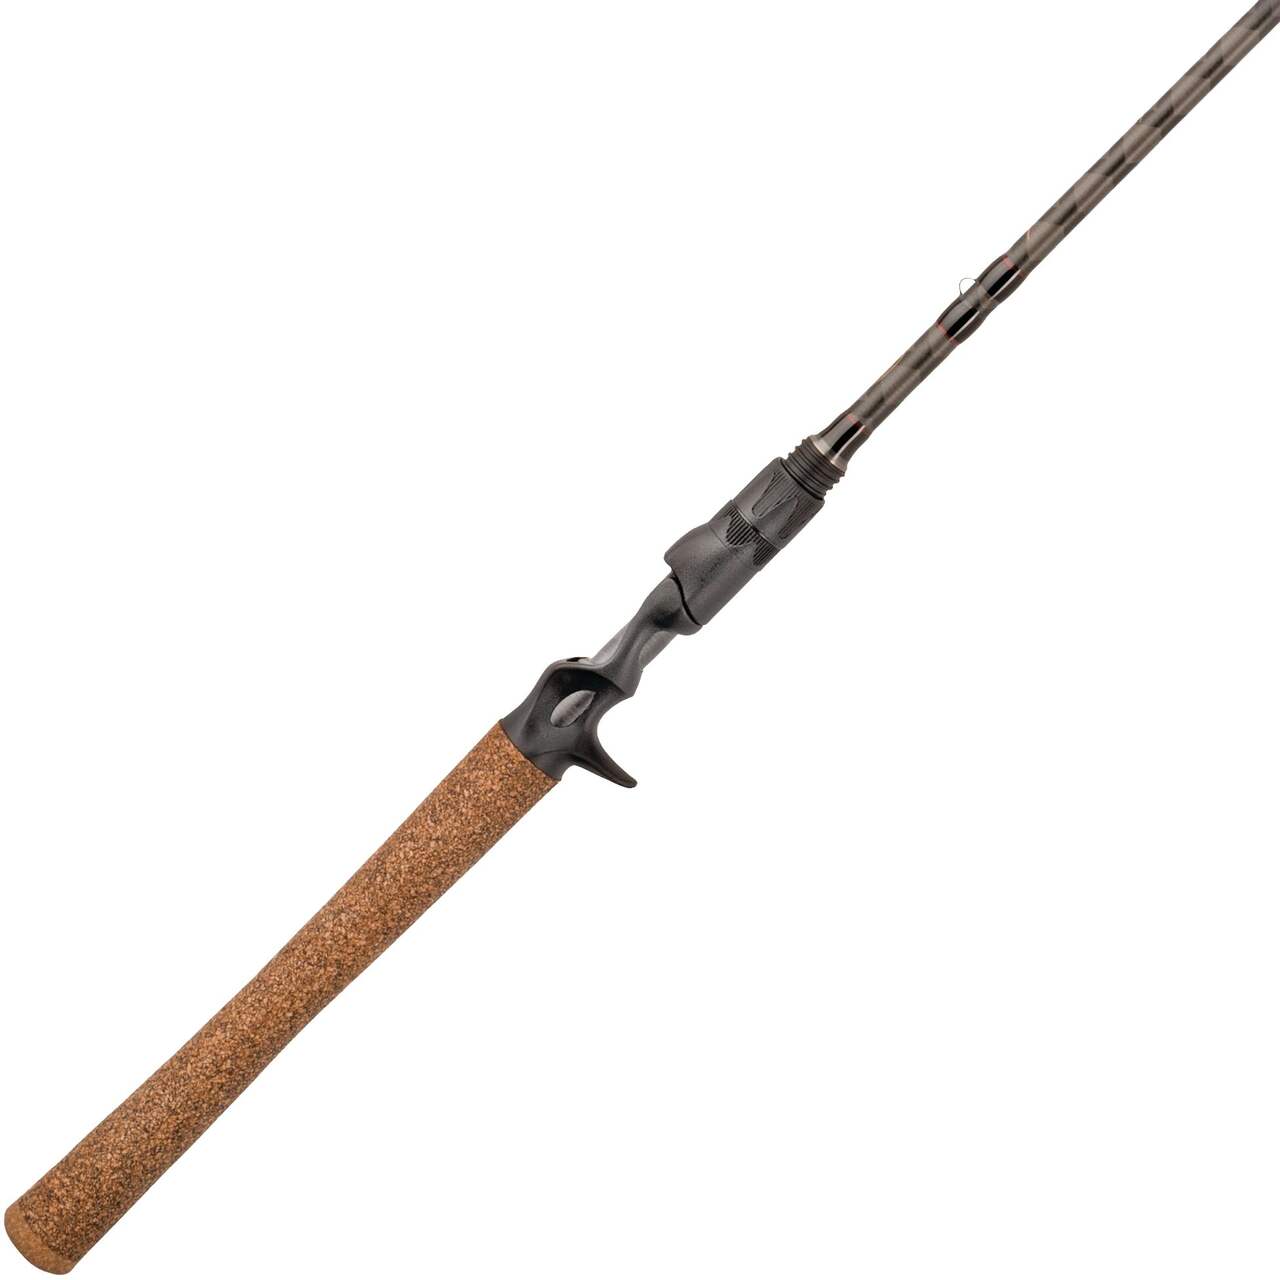 Berkley Lightning BSLR 662ML spin rod, Sports Equipment, Fishing